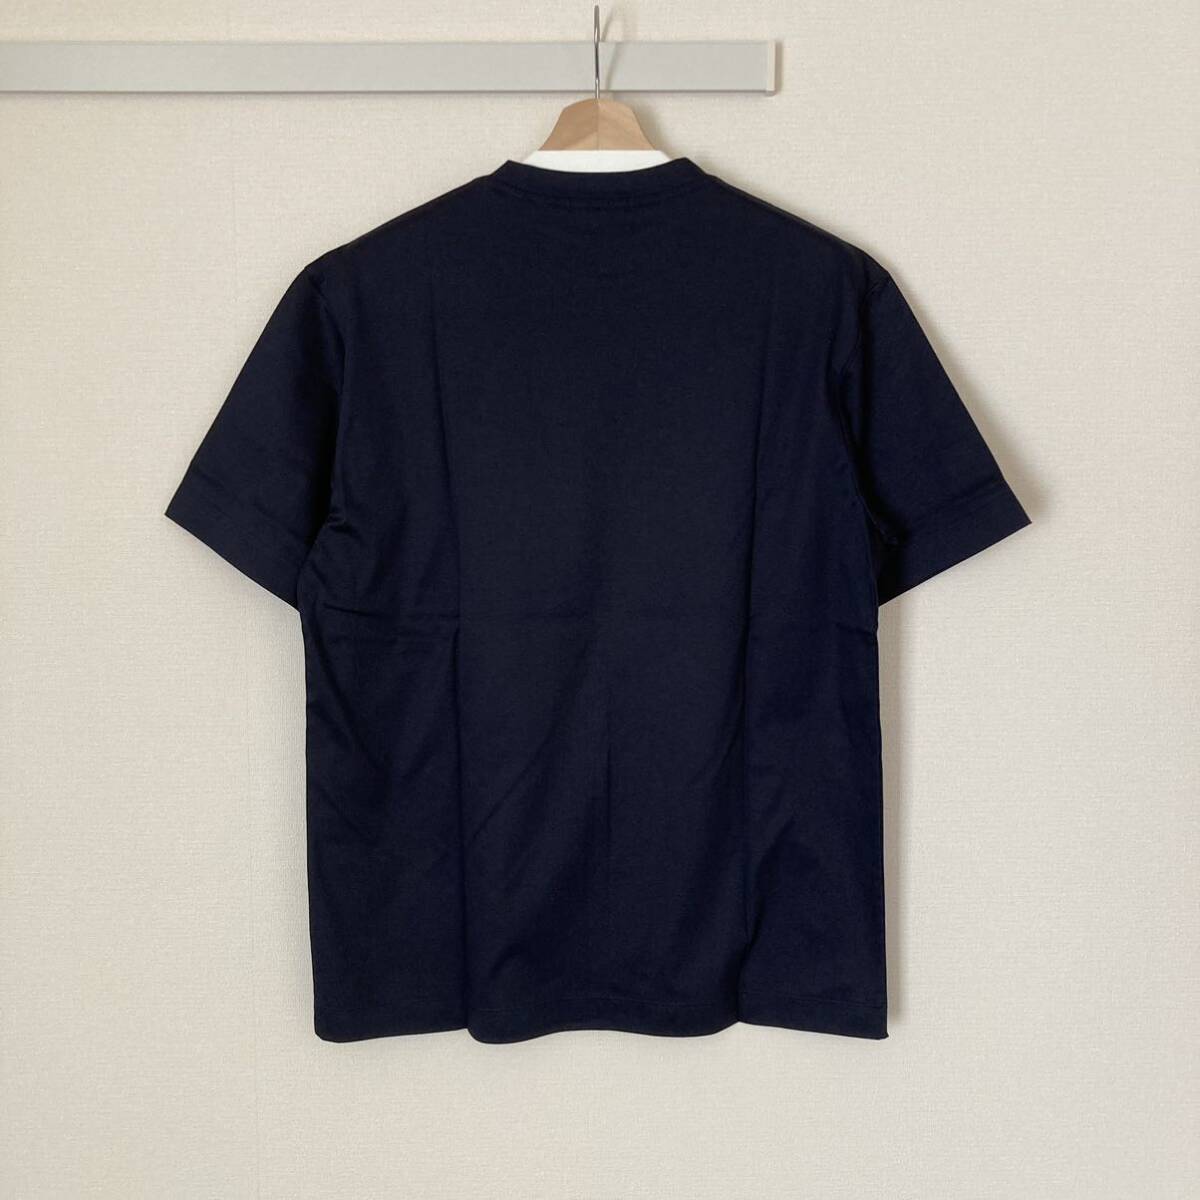 [ new goods tag attaching * regular price 16,500 jpy ] Black Label k rest Bridge short sleeves T-shirt L BURBERRY BLACK LABEL CRESTBRIDGE